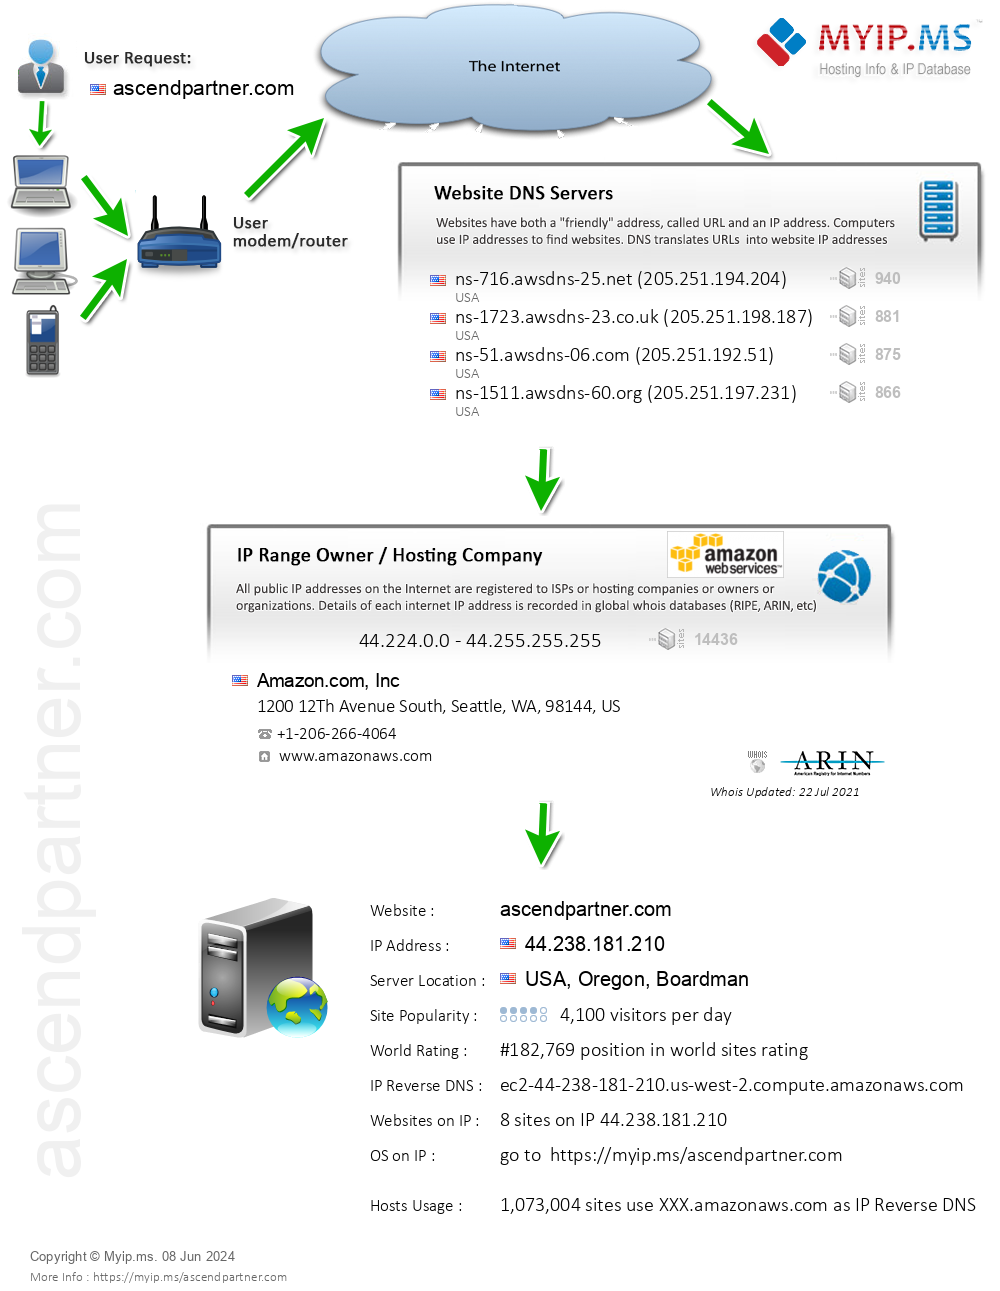 Ascendpartner.com - Website Hosting Visual IP Diagram